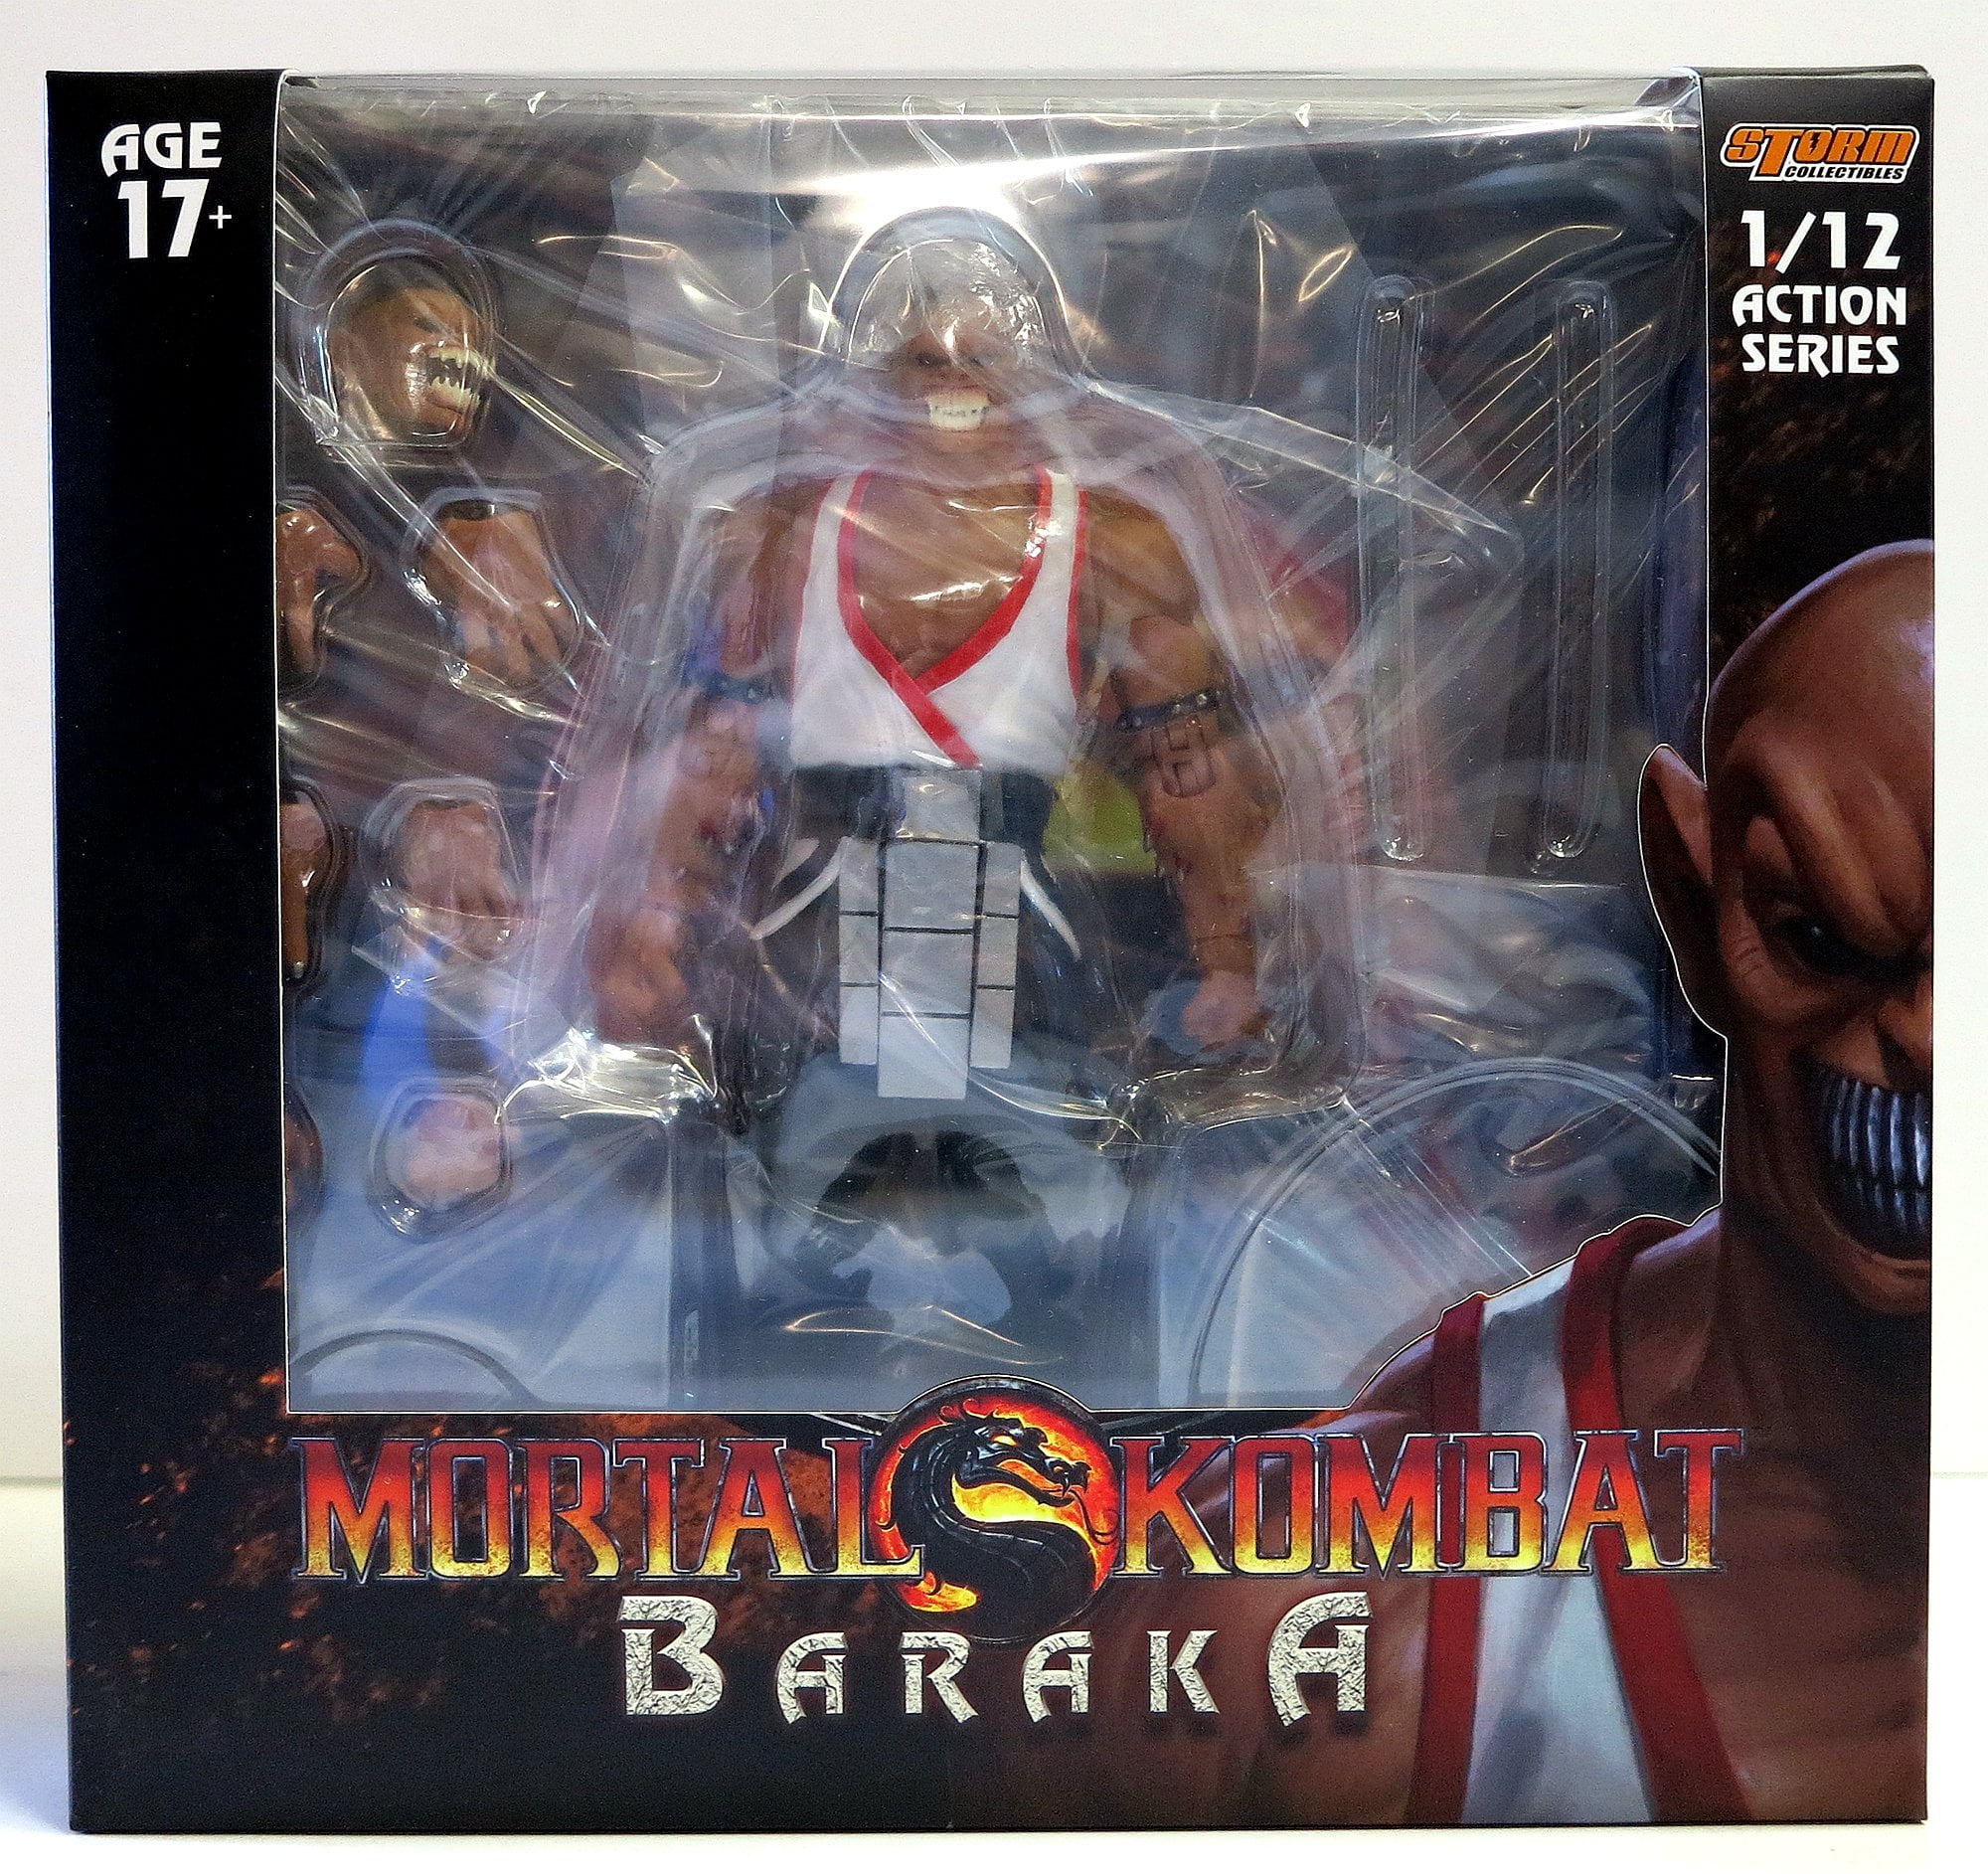 Baraka - 1/12 Scale - Mortal Kombat - Storm Collectibles